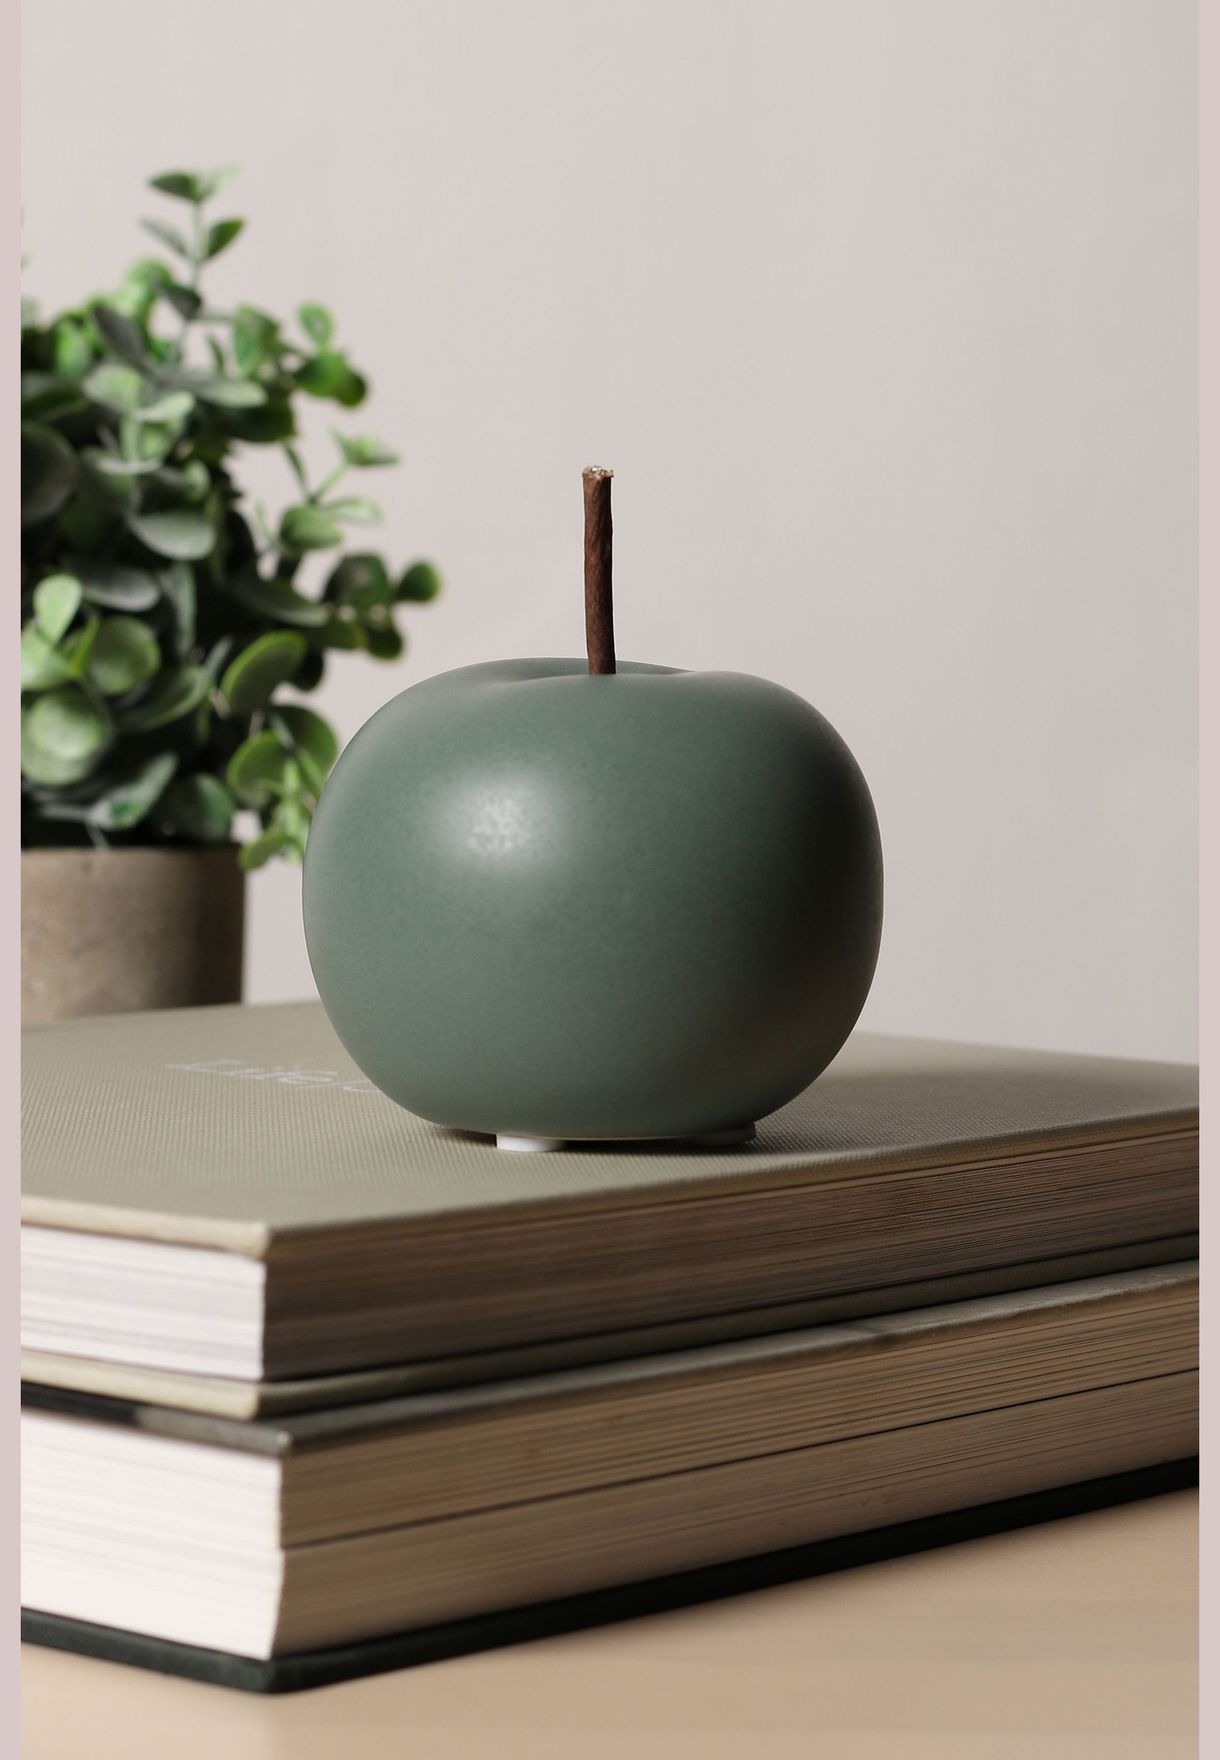 Modern Apple Shaped Solid Minimalistic Ceramic Showpiece For Home Decor 